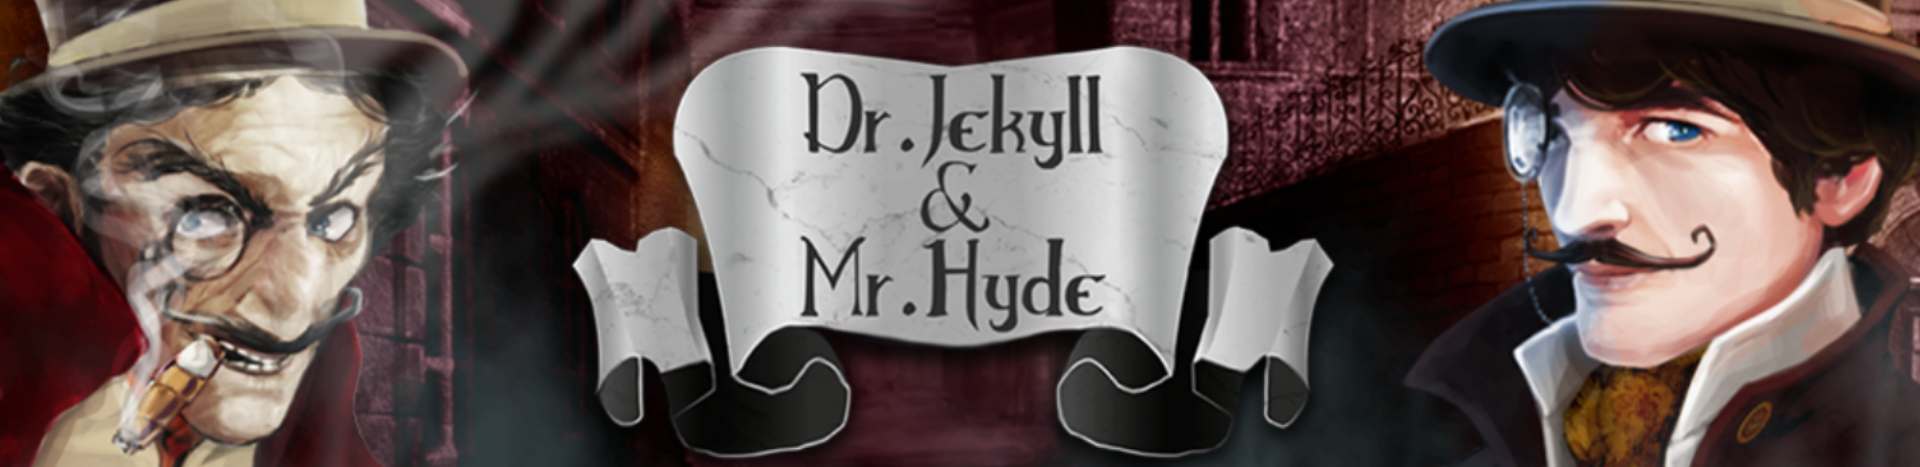 Dr Jekyll & Mr Hyde kolikkopeli